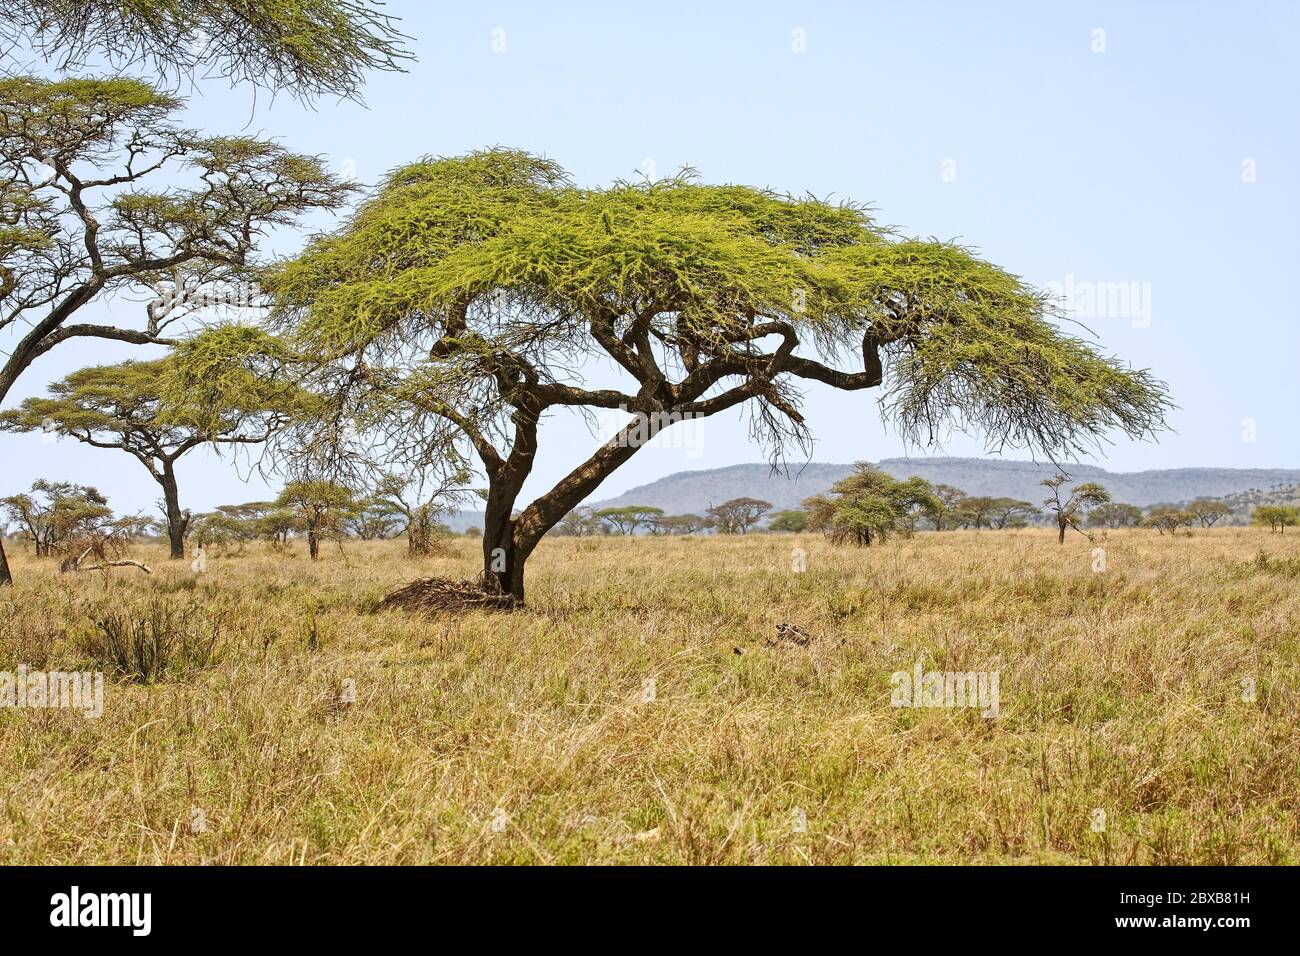 Acacia tortilis; African icon; Umbrella tree, zebras grazing, nature, landscape, scene, Serengeti National Park,Tanzania, Africa Stock Photo